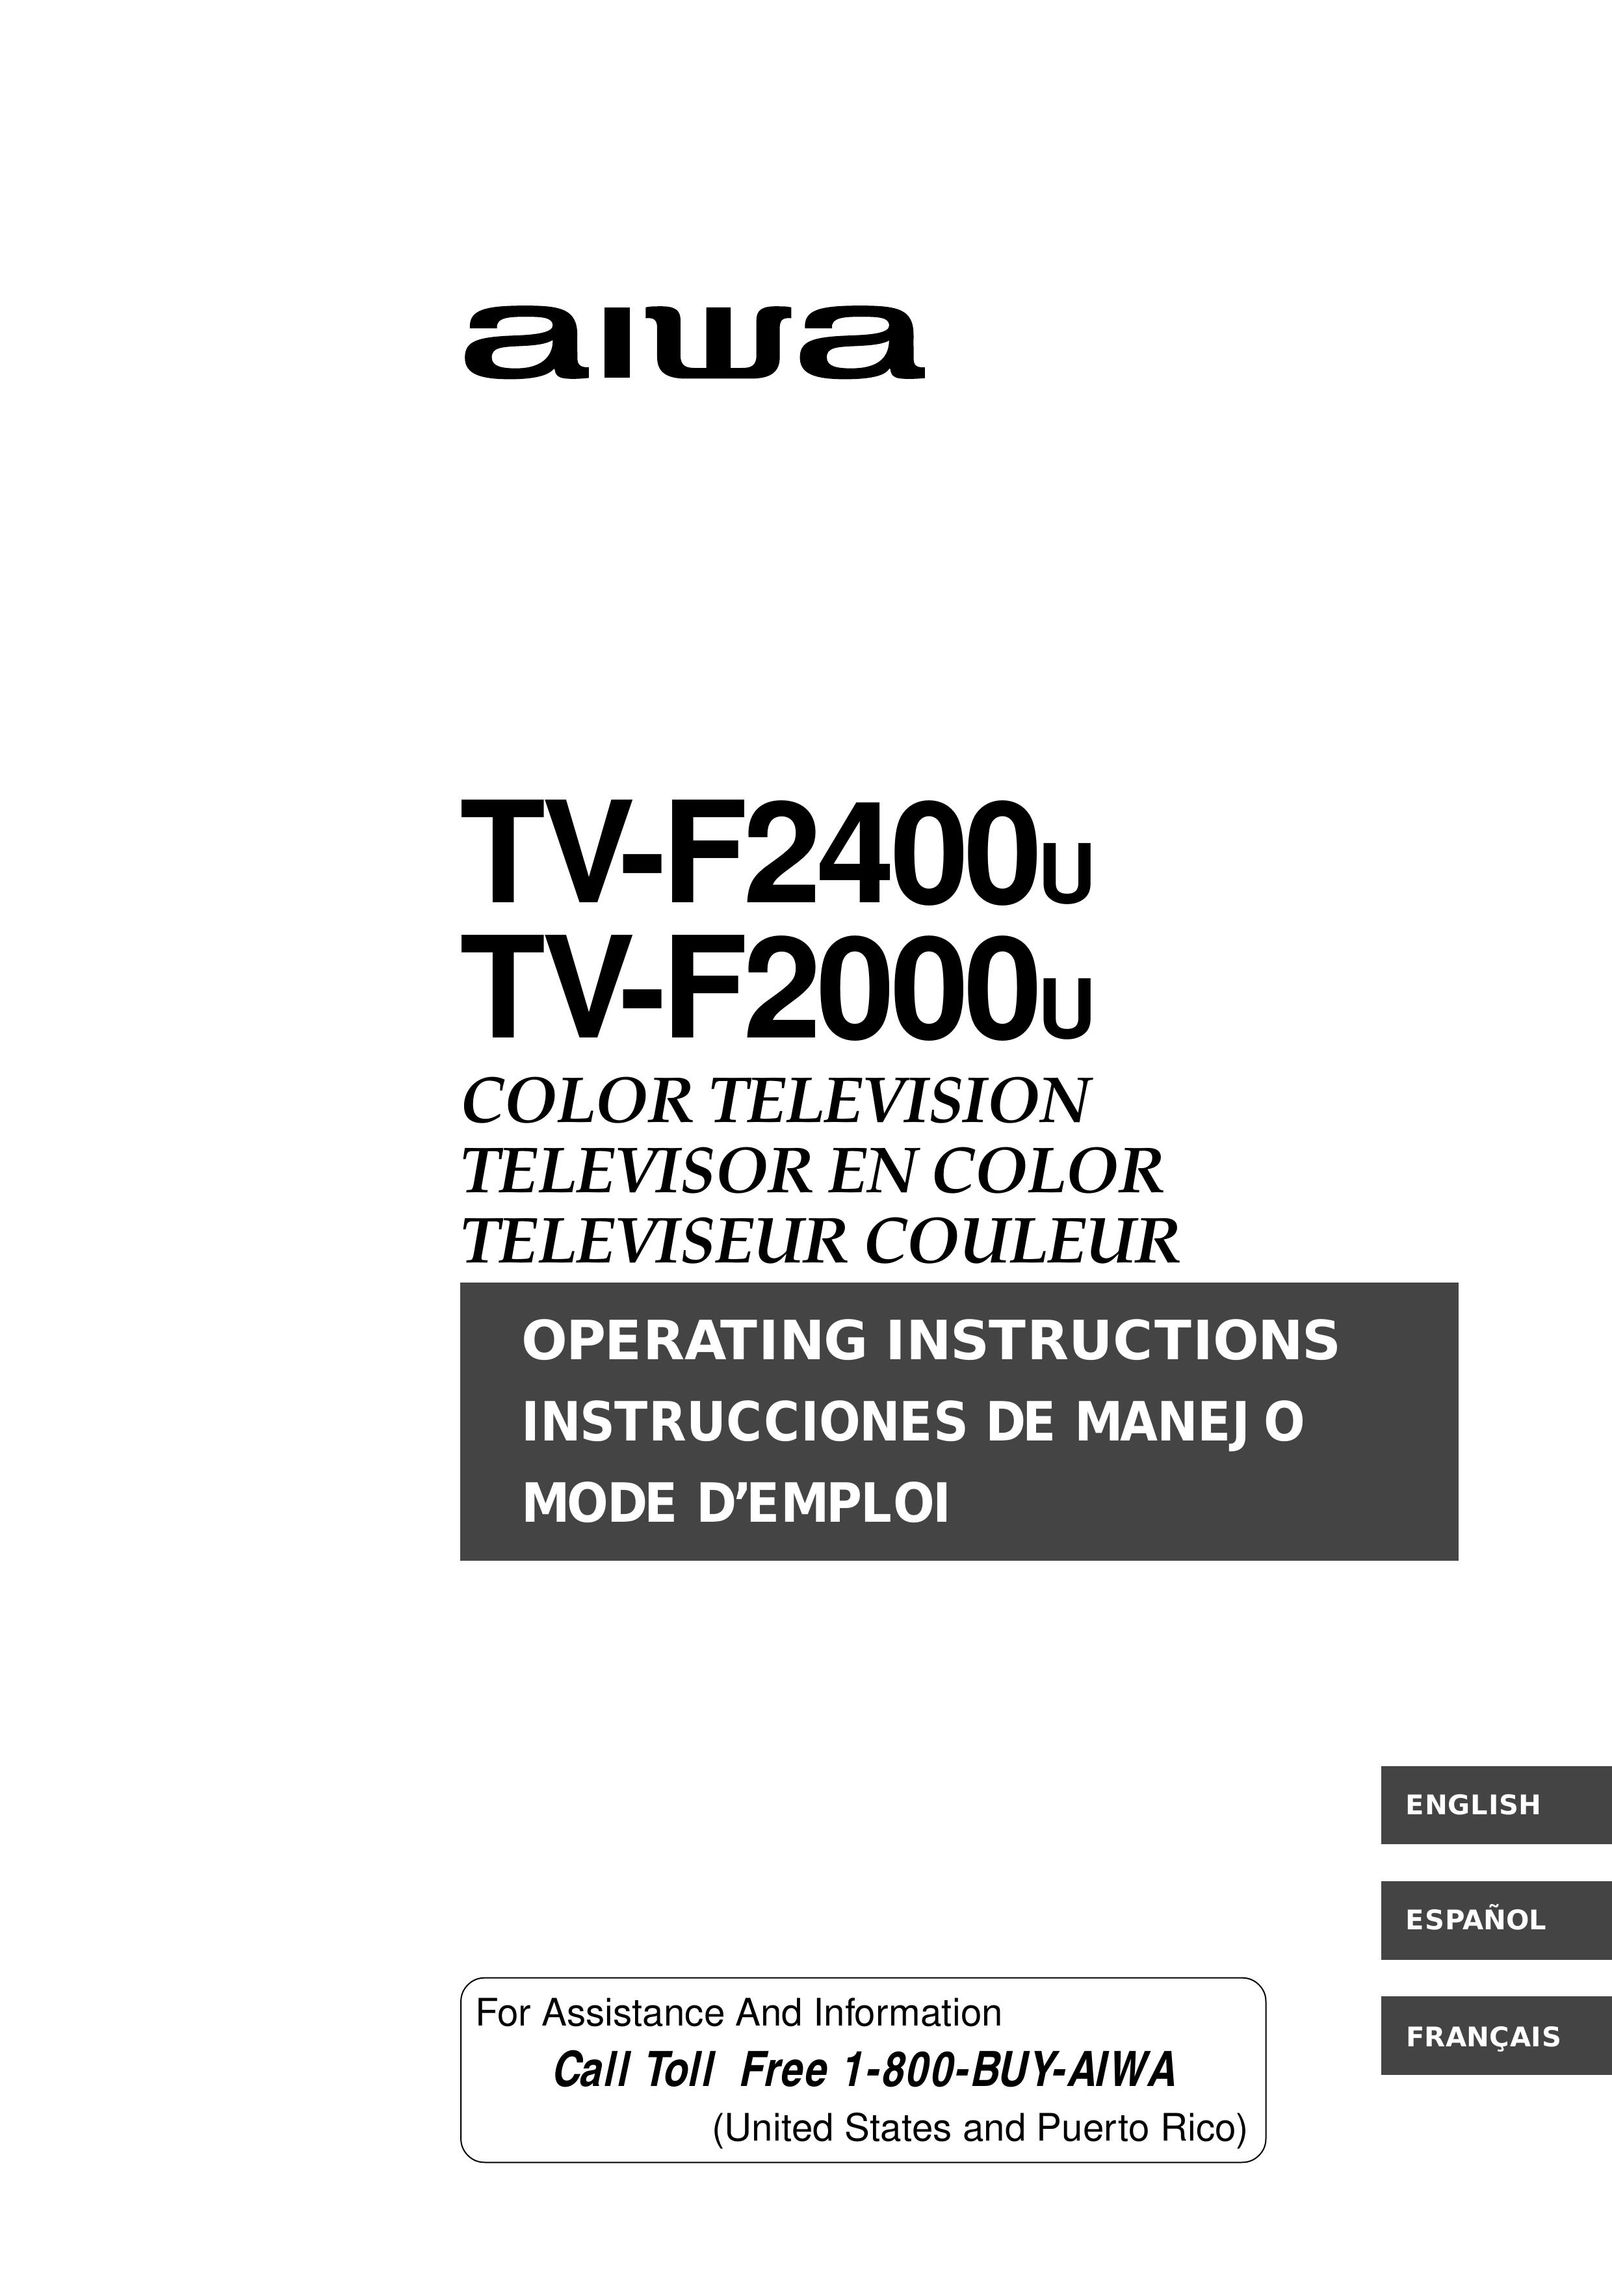 Aiwa TV-F2000u, TV-F2400u CRT Television User Manual